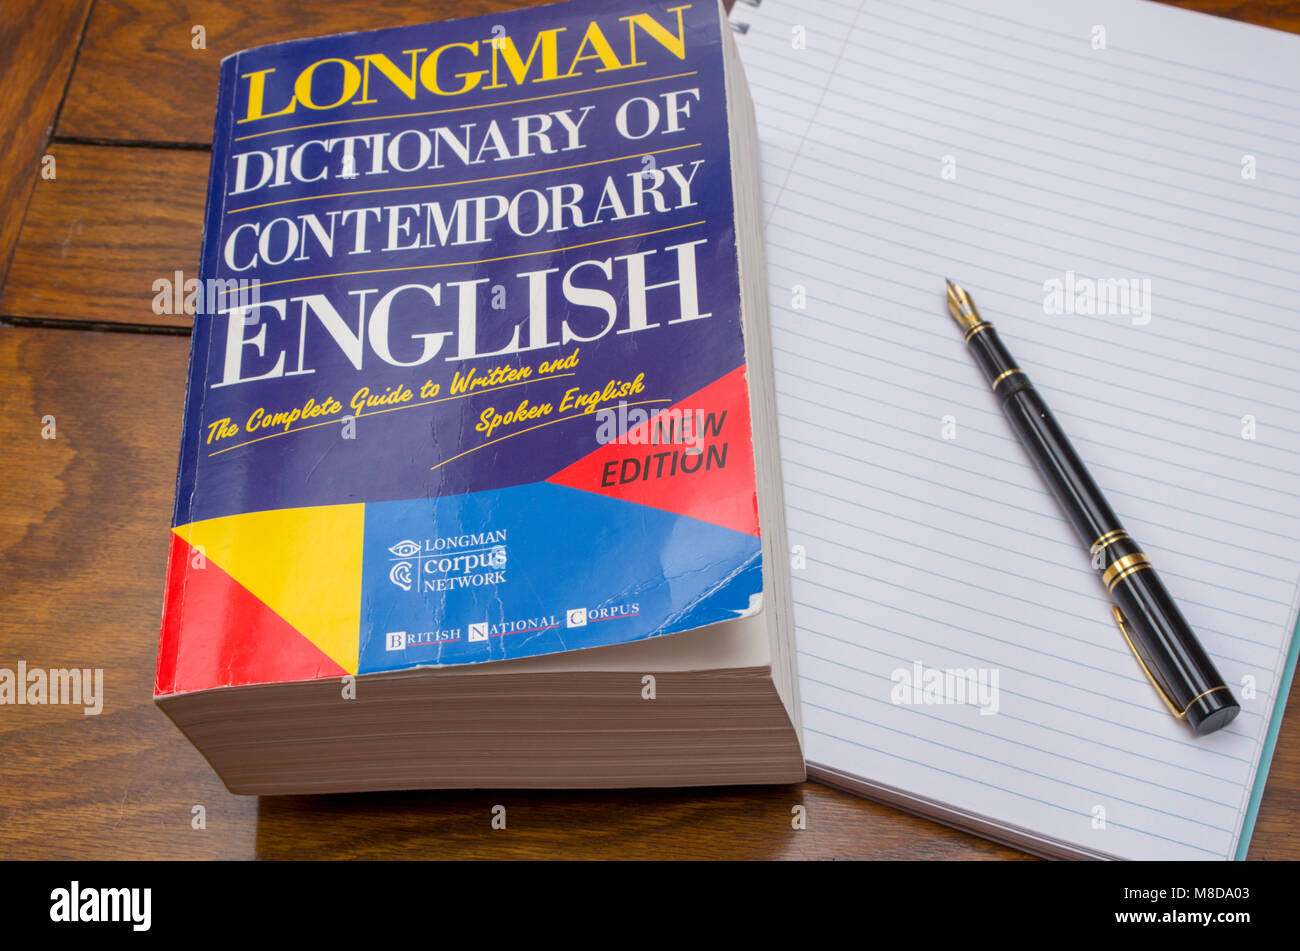 longman dictionary of contemprary english